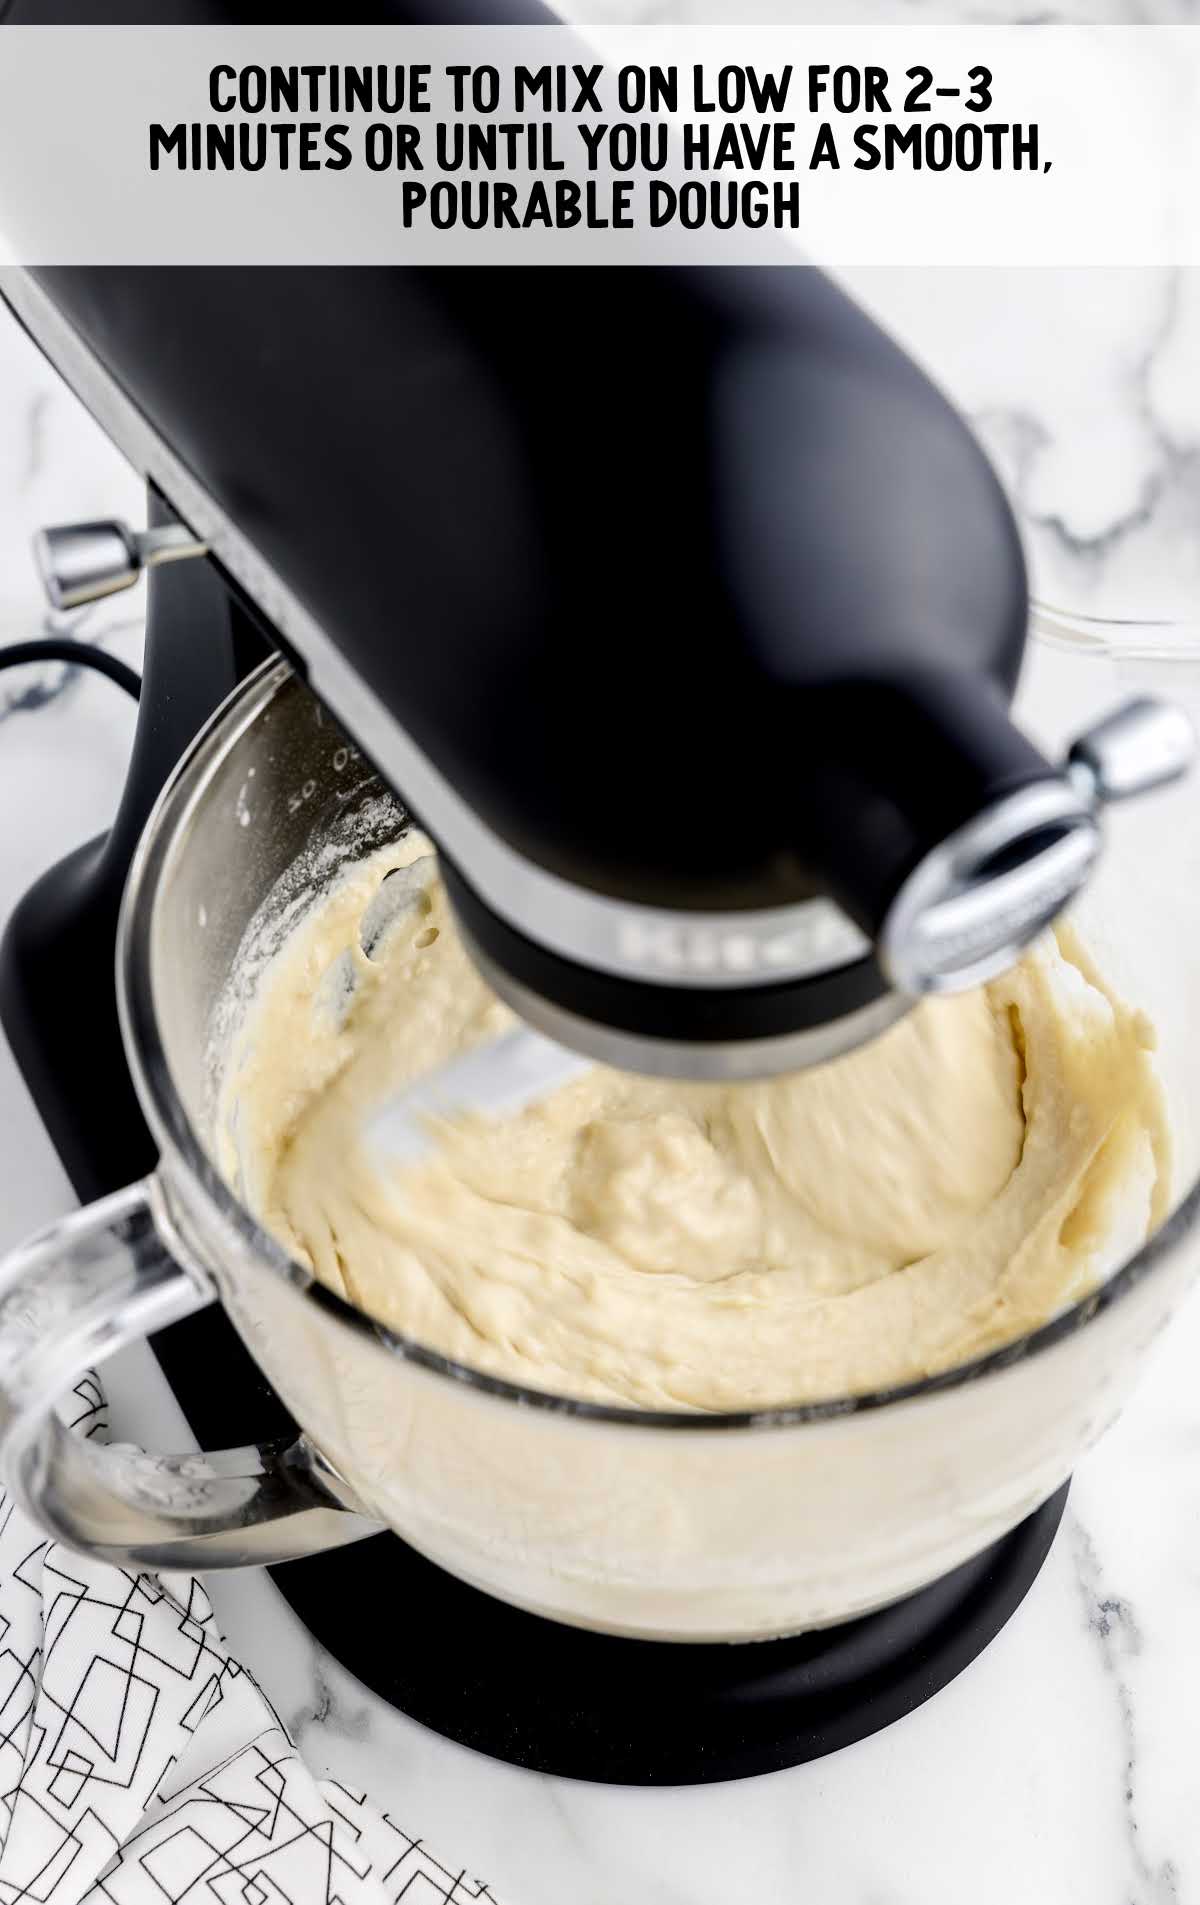 dough ingredients being blended in a blender